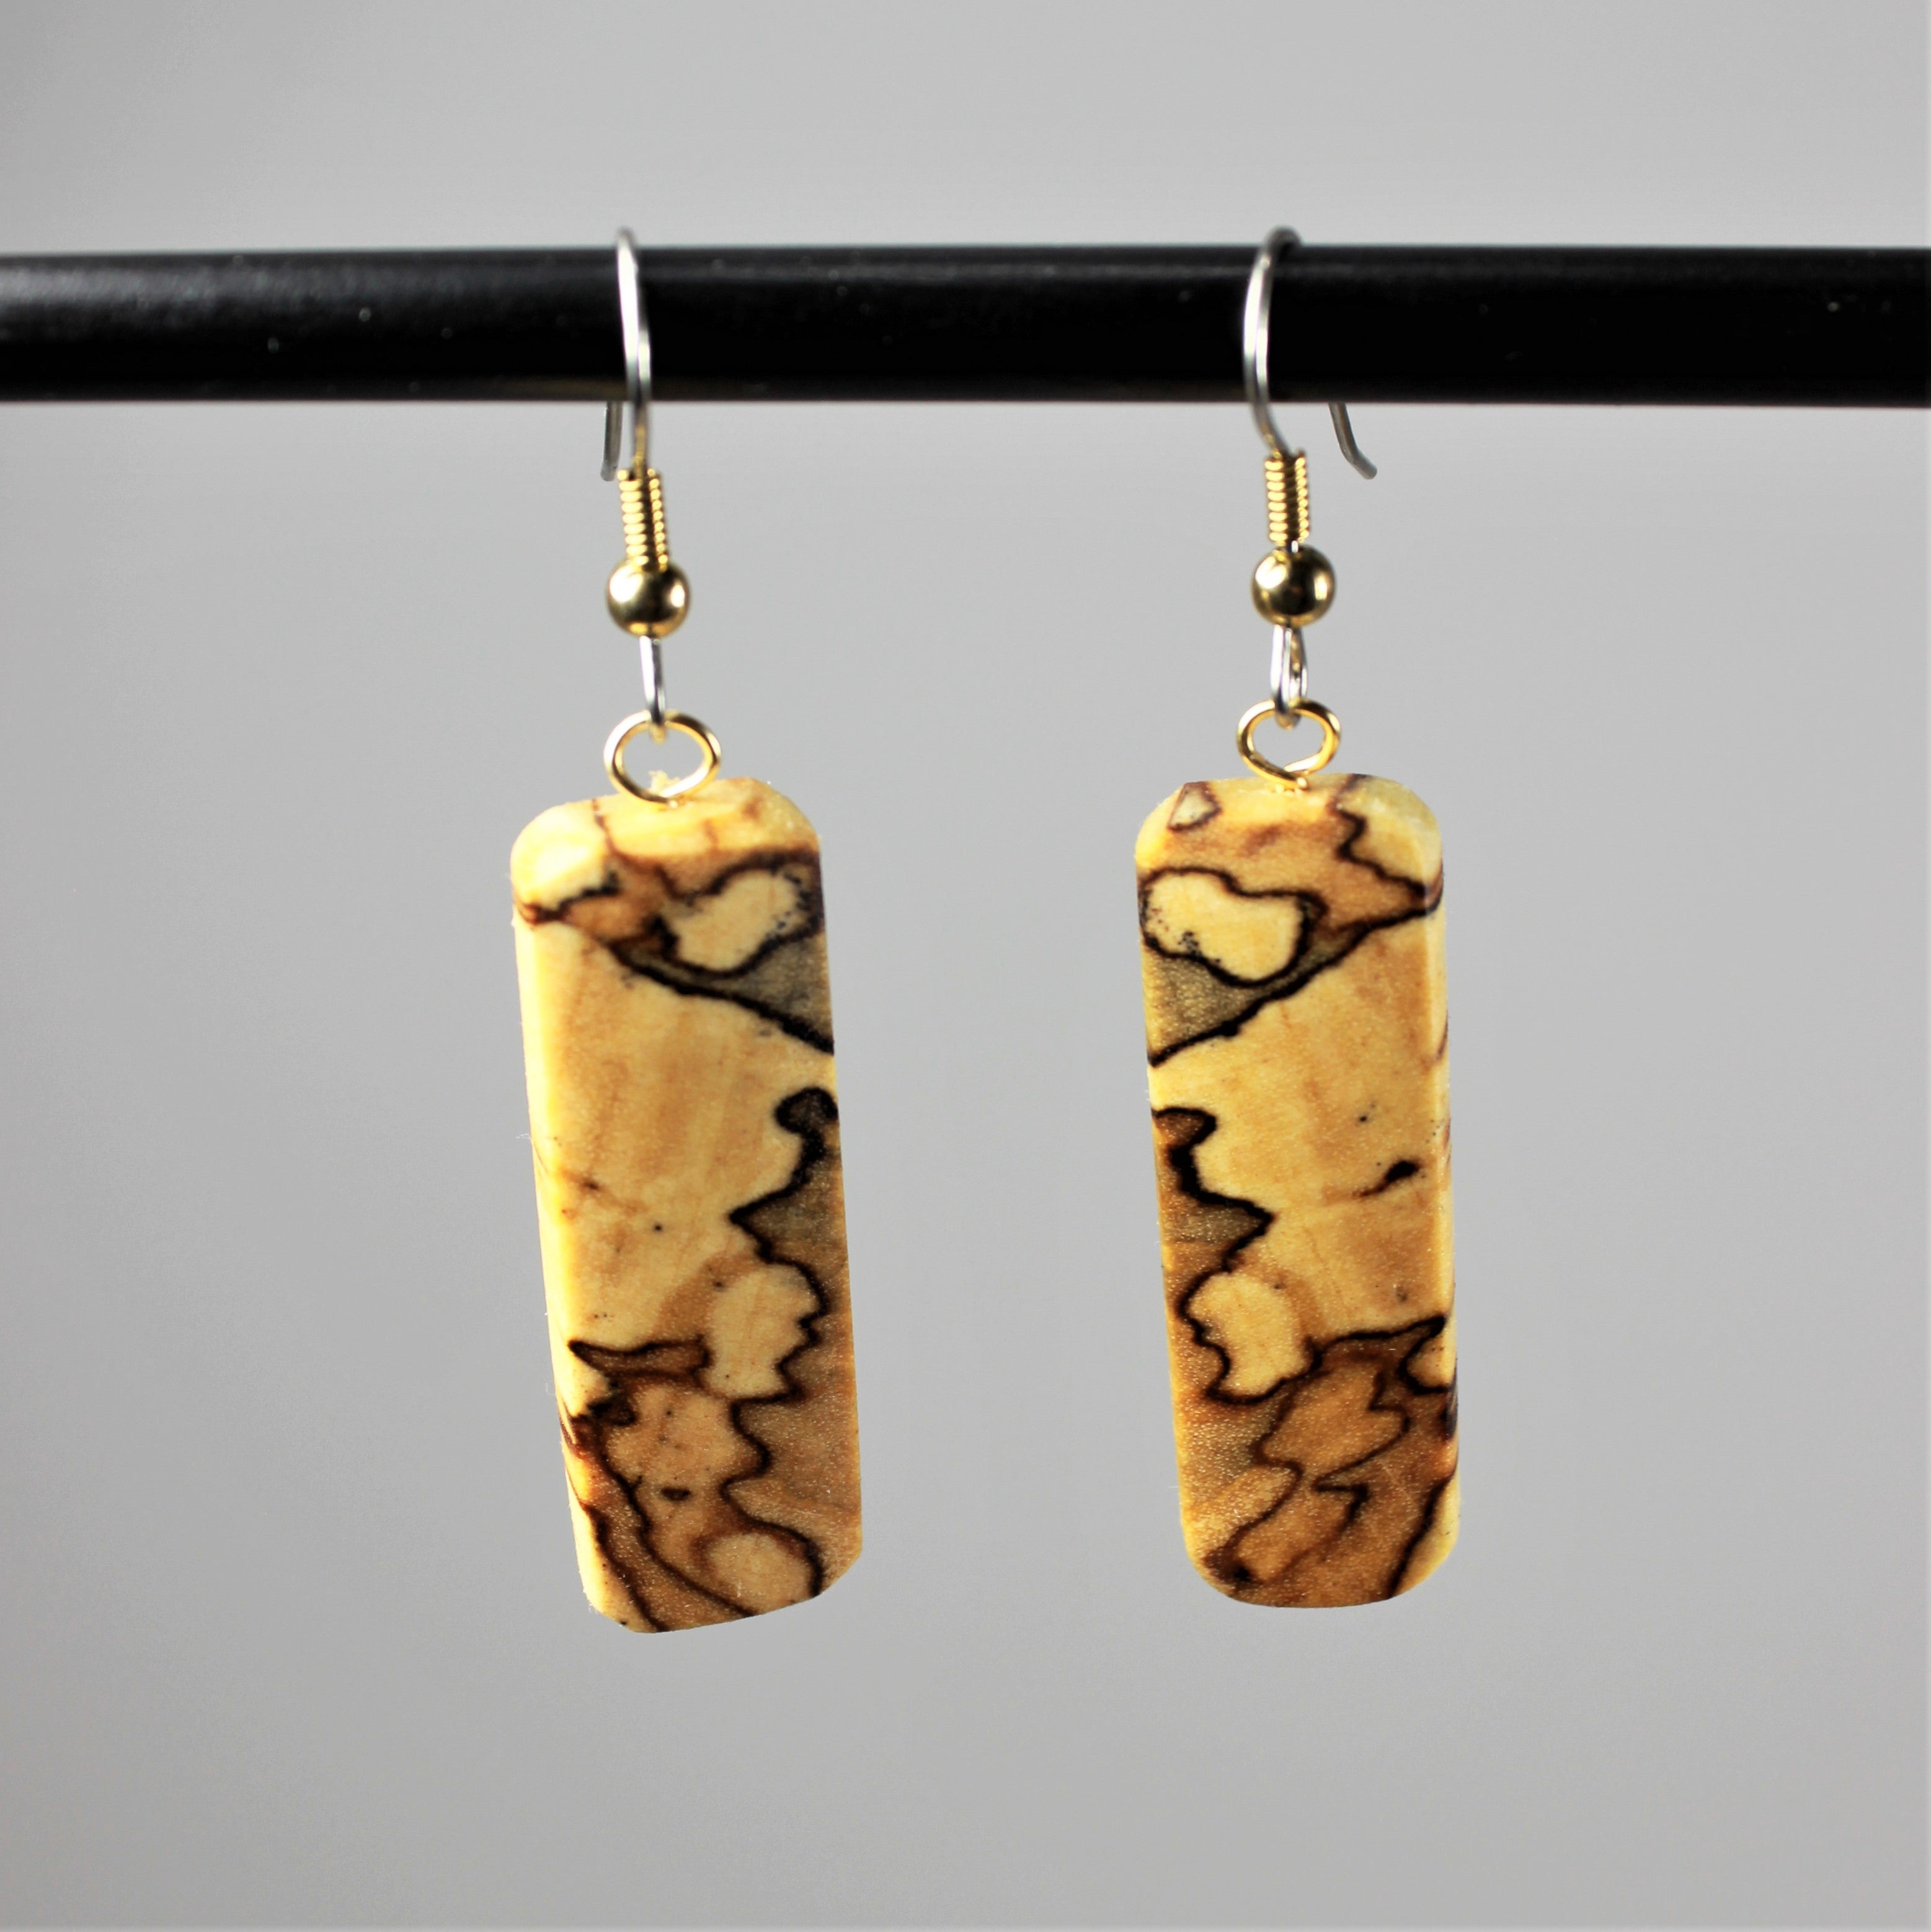 Boreal birch earrings